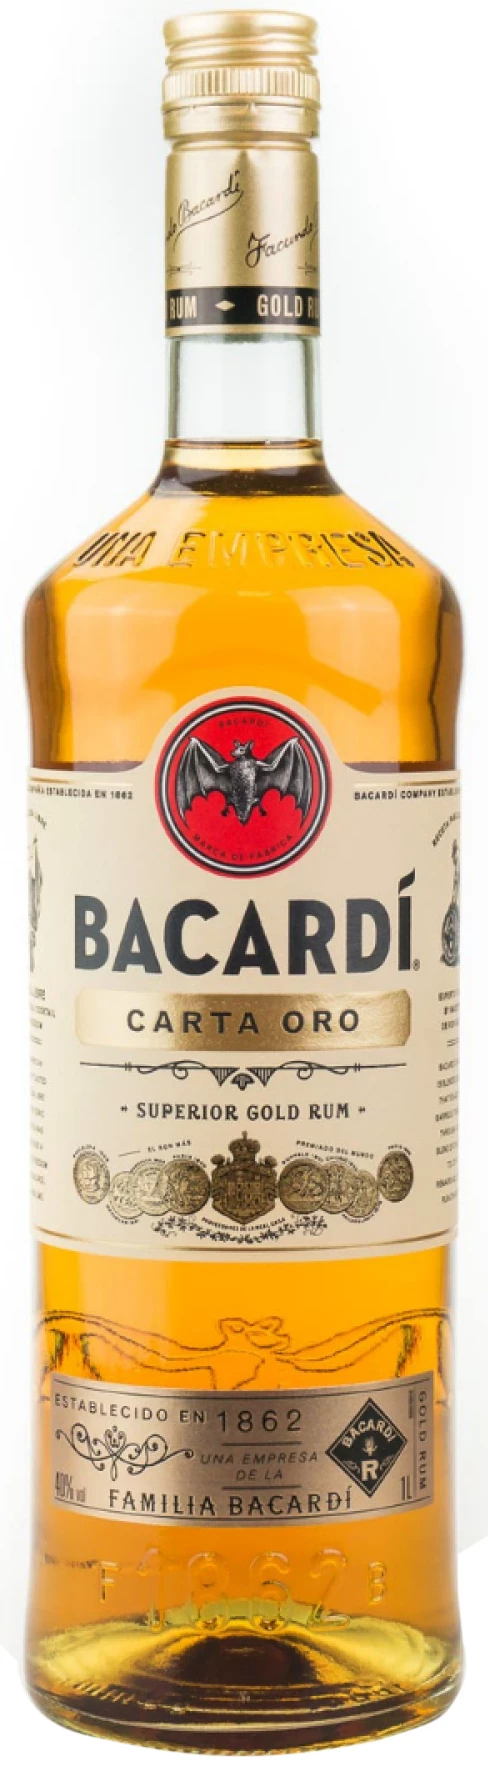 Løgismose Spiritus Rom Bacardi Gold Carta Oro Caribien 40% 70cl - 128617